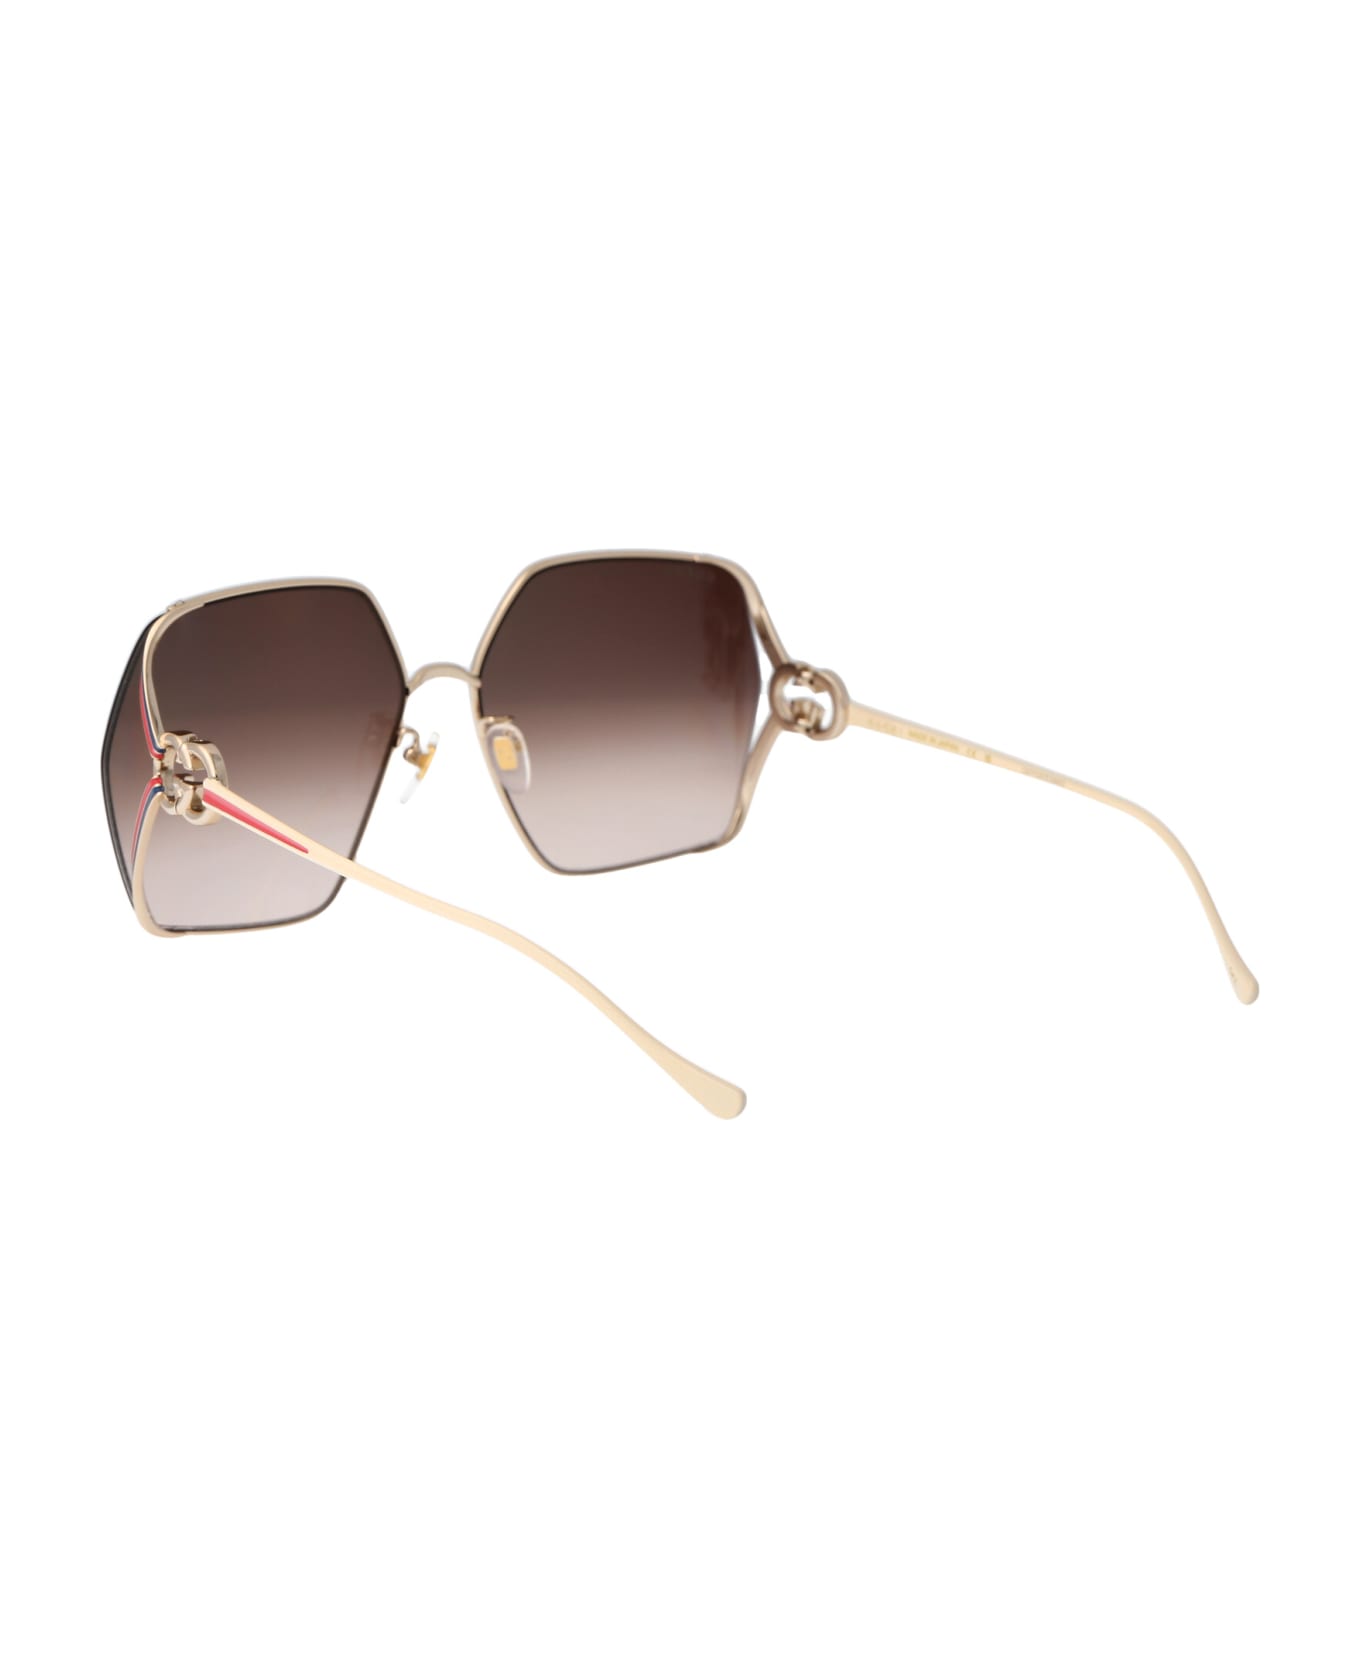 Gucci Eyewear Gg1322sa Sunglasses - 002 GOLD IVORY BROWN